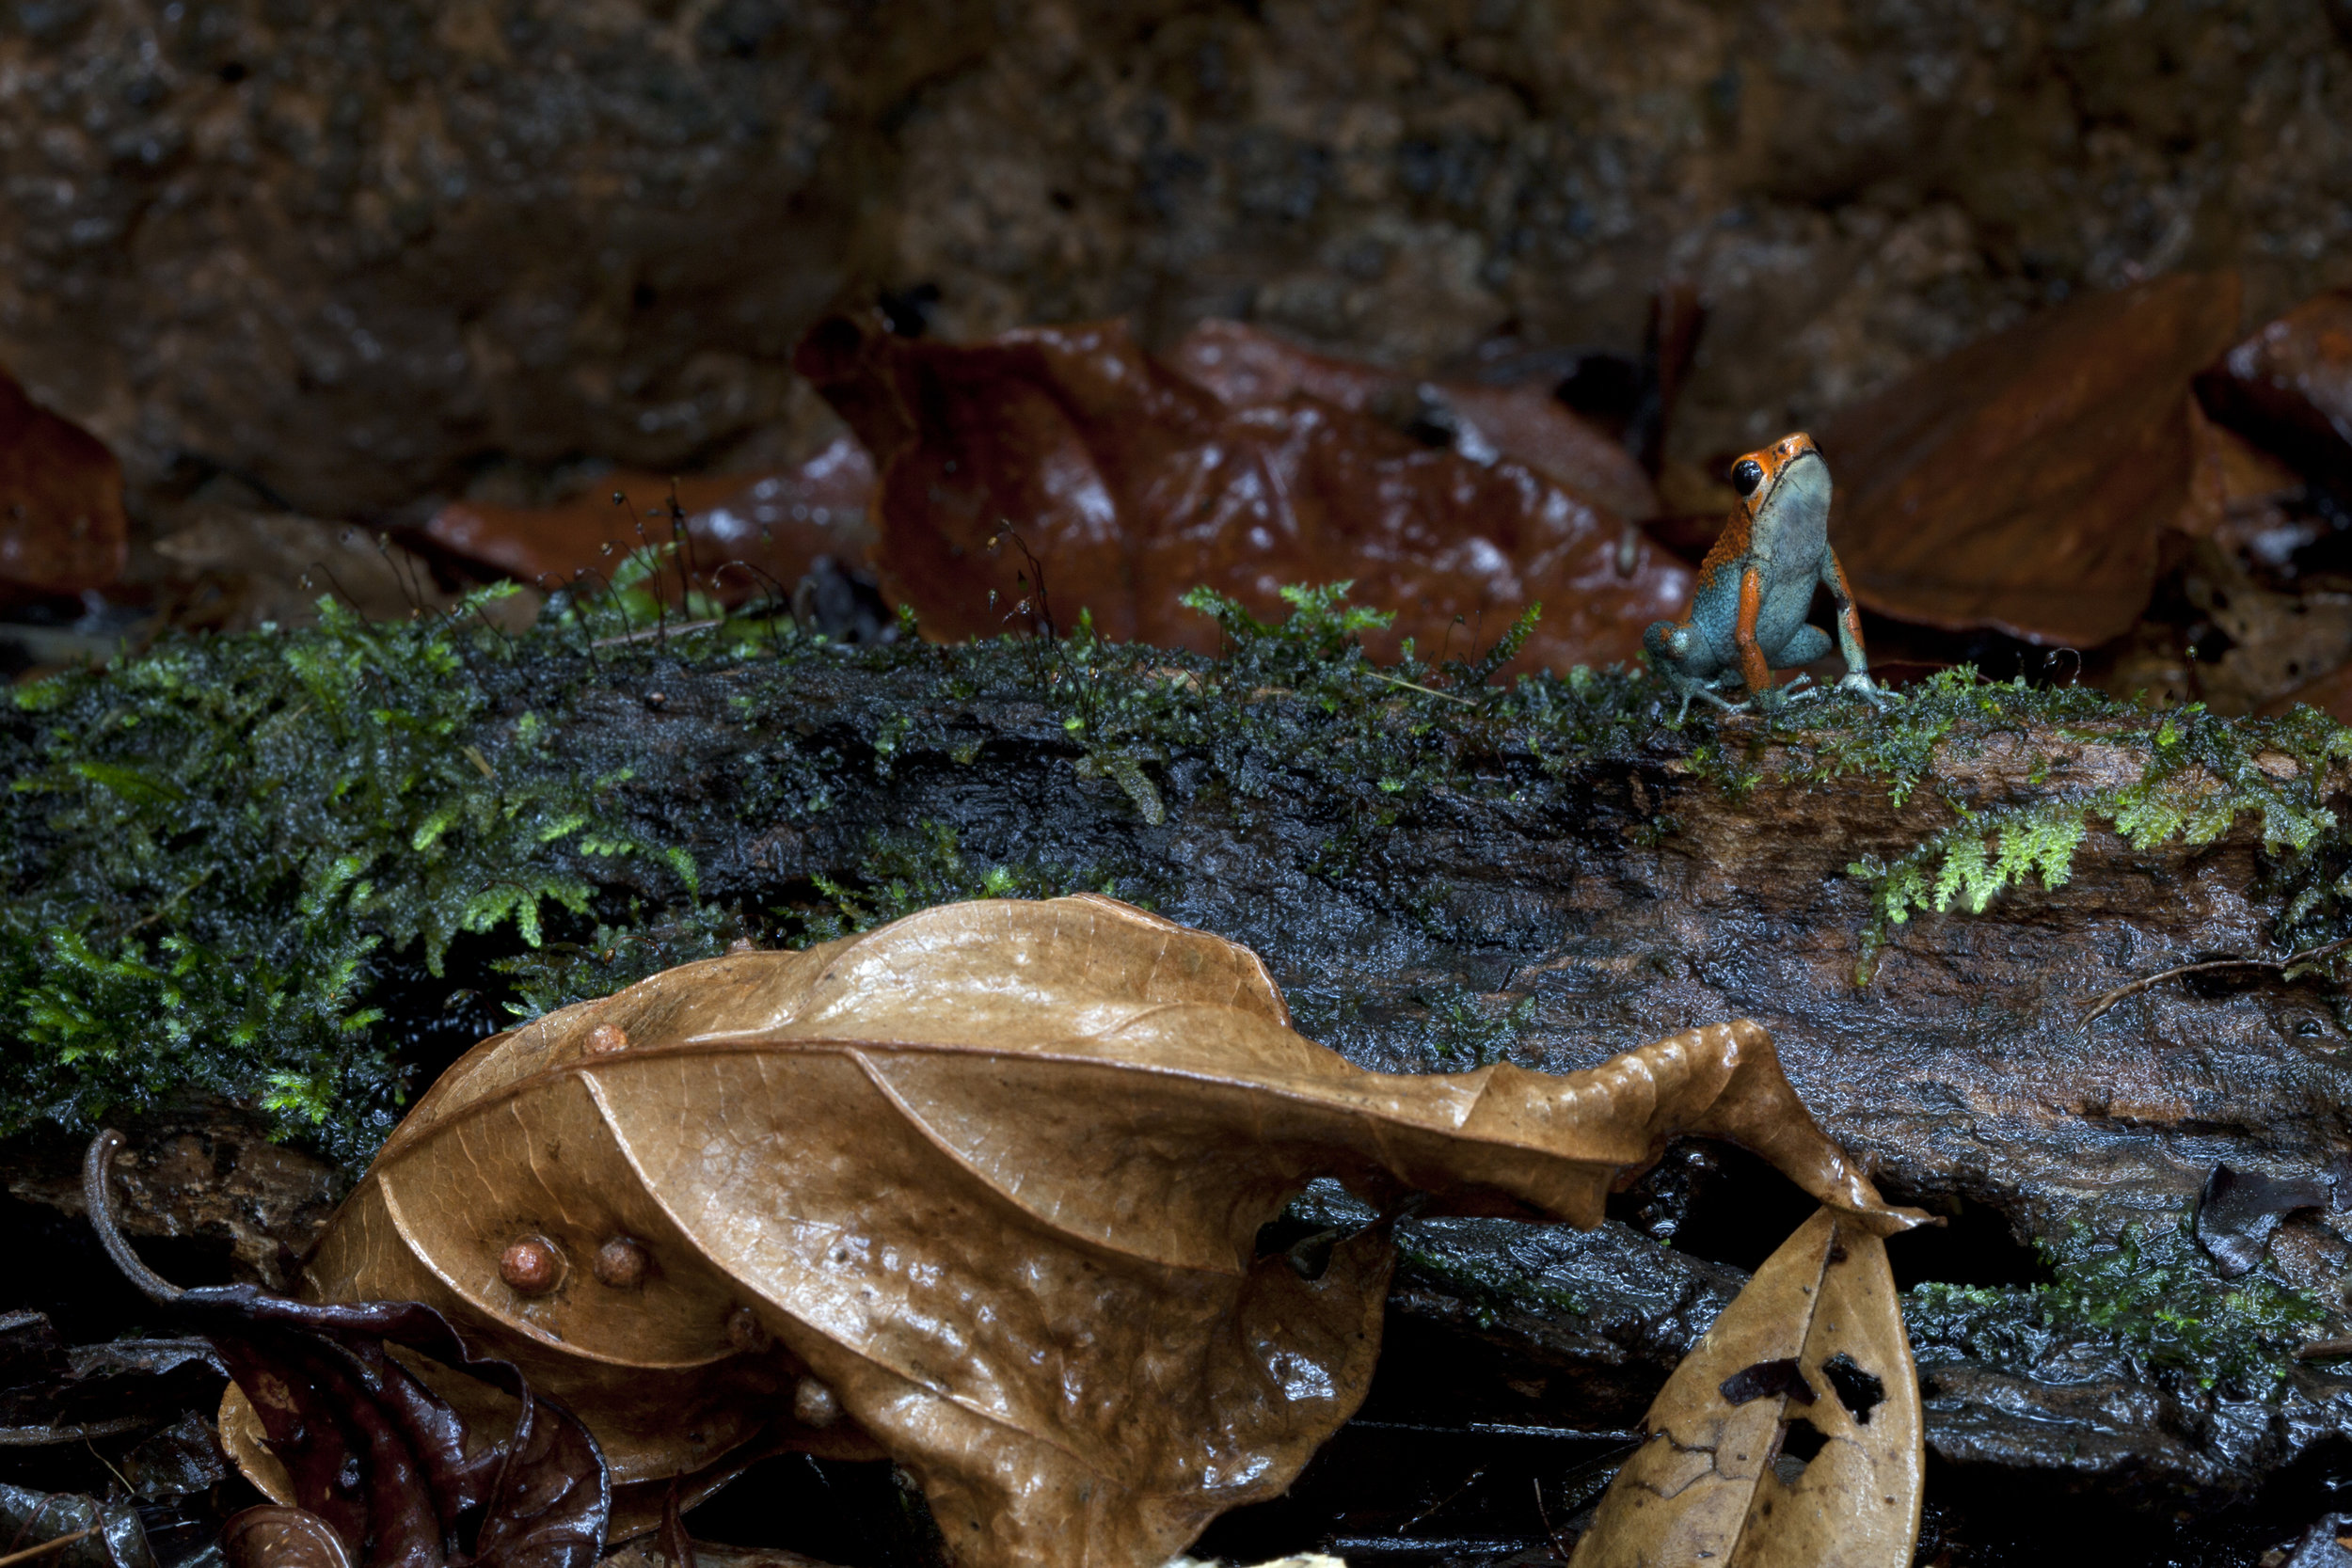  Poison Dart Frog, Costa Rican Amphibian Research Center, Costa Rica 